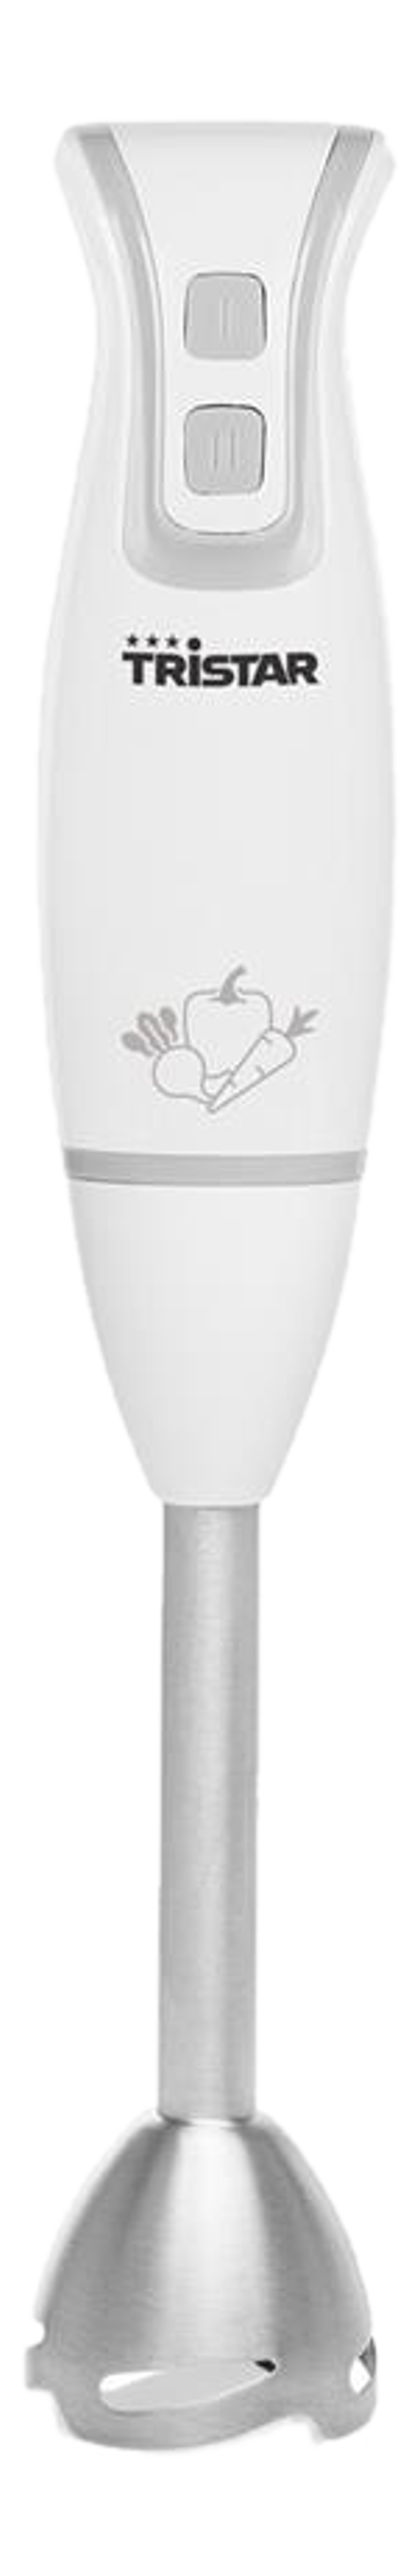 TRISTAR MX-4825 - Mixeur plongeant (blanc)